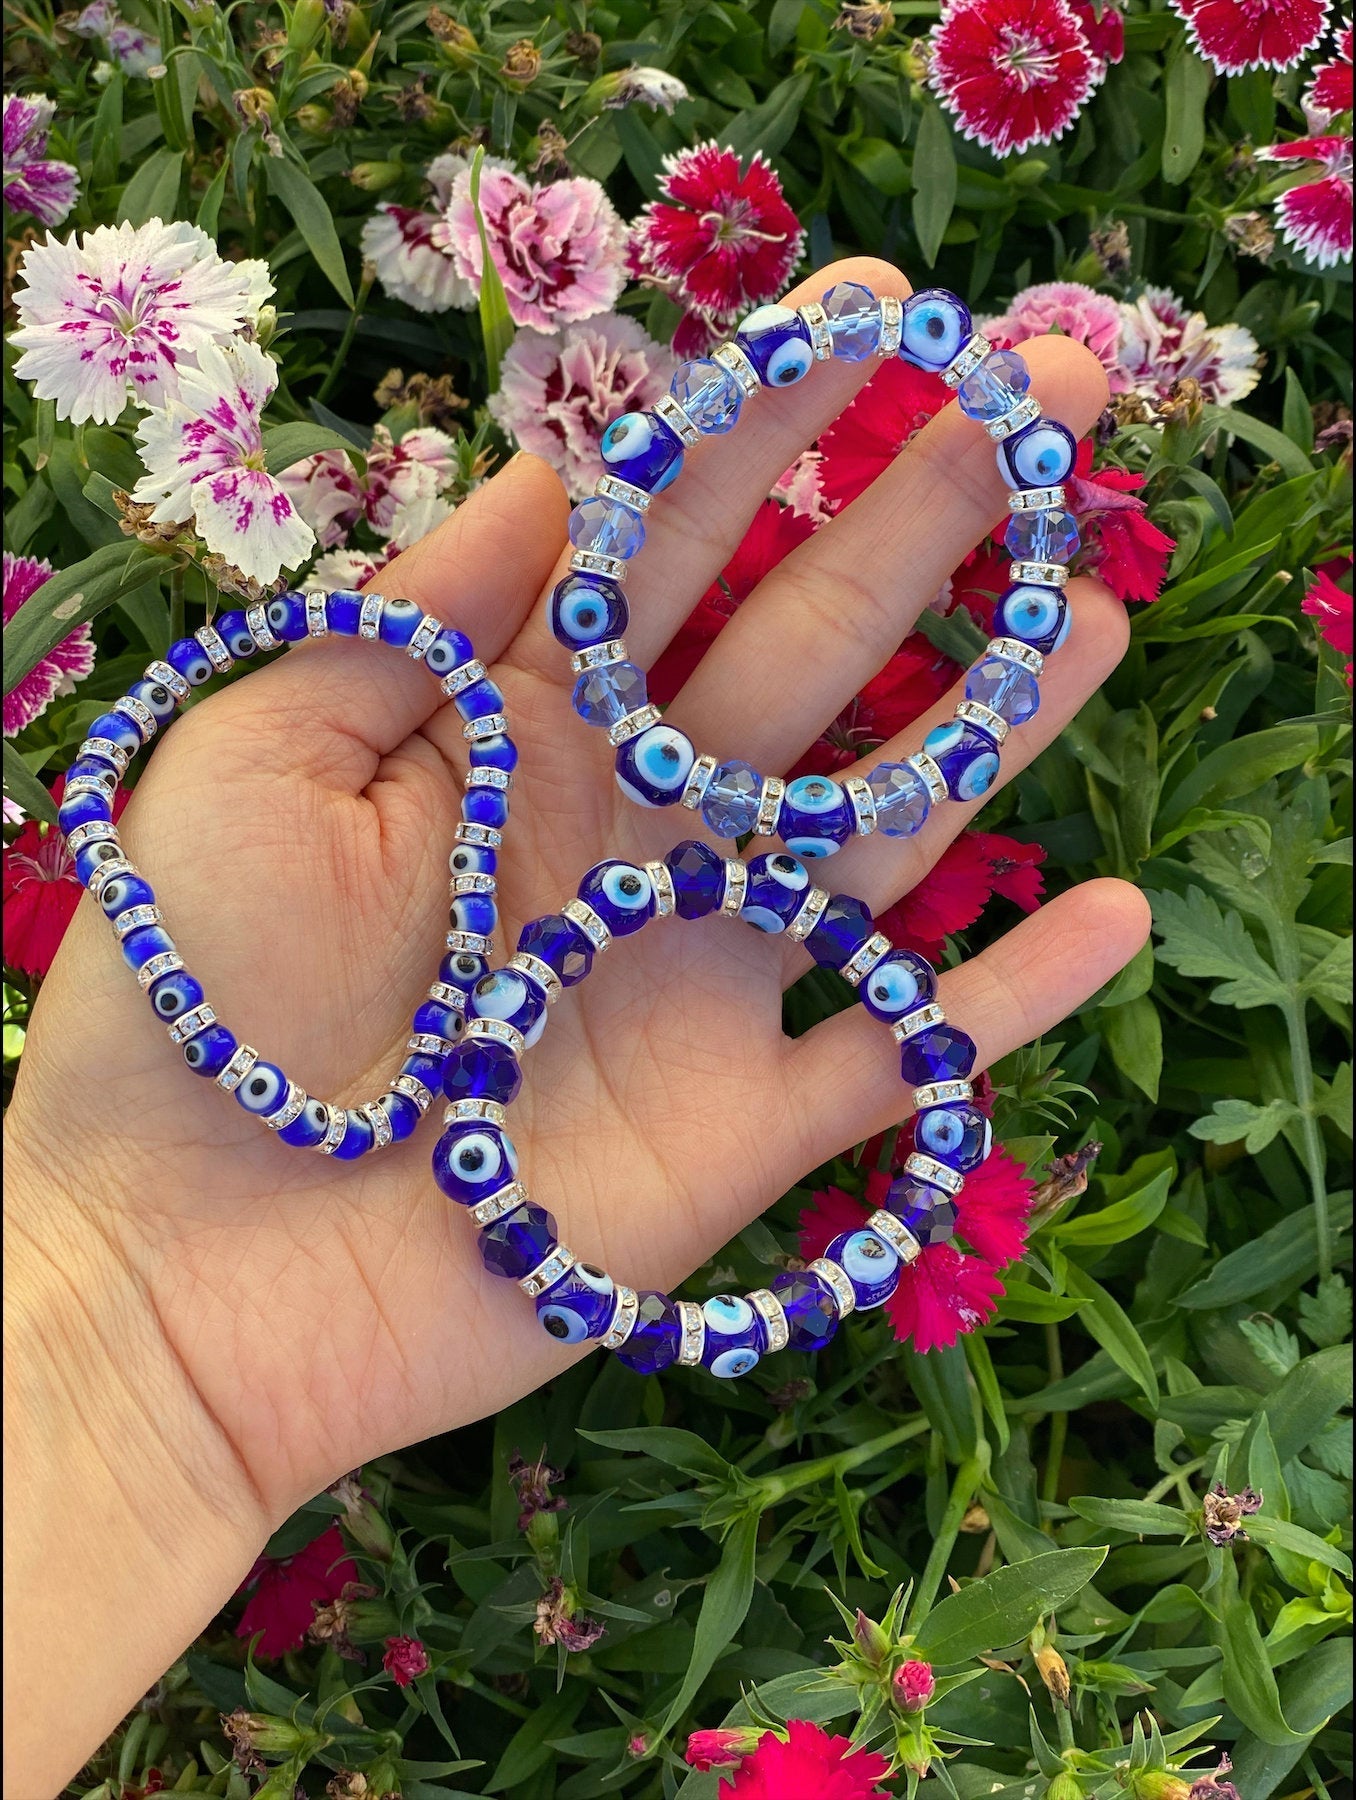 Blue Evil Eye Charm Bracelet with Rhinestones - Shop Cosmic Healing